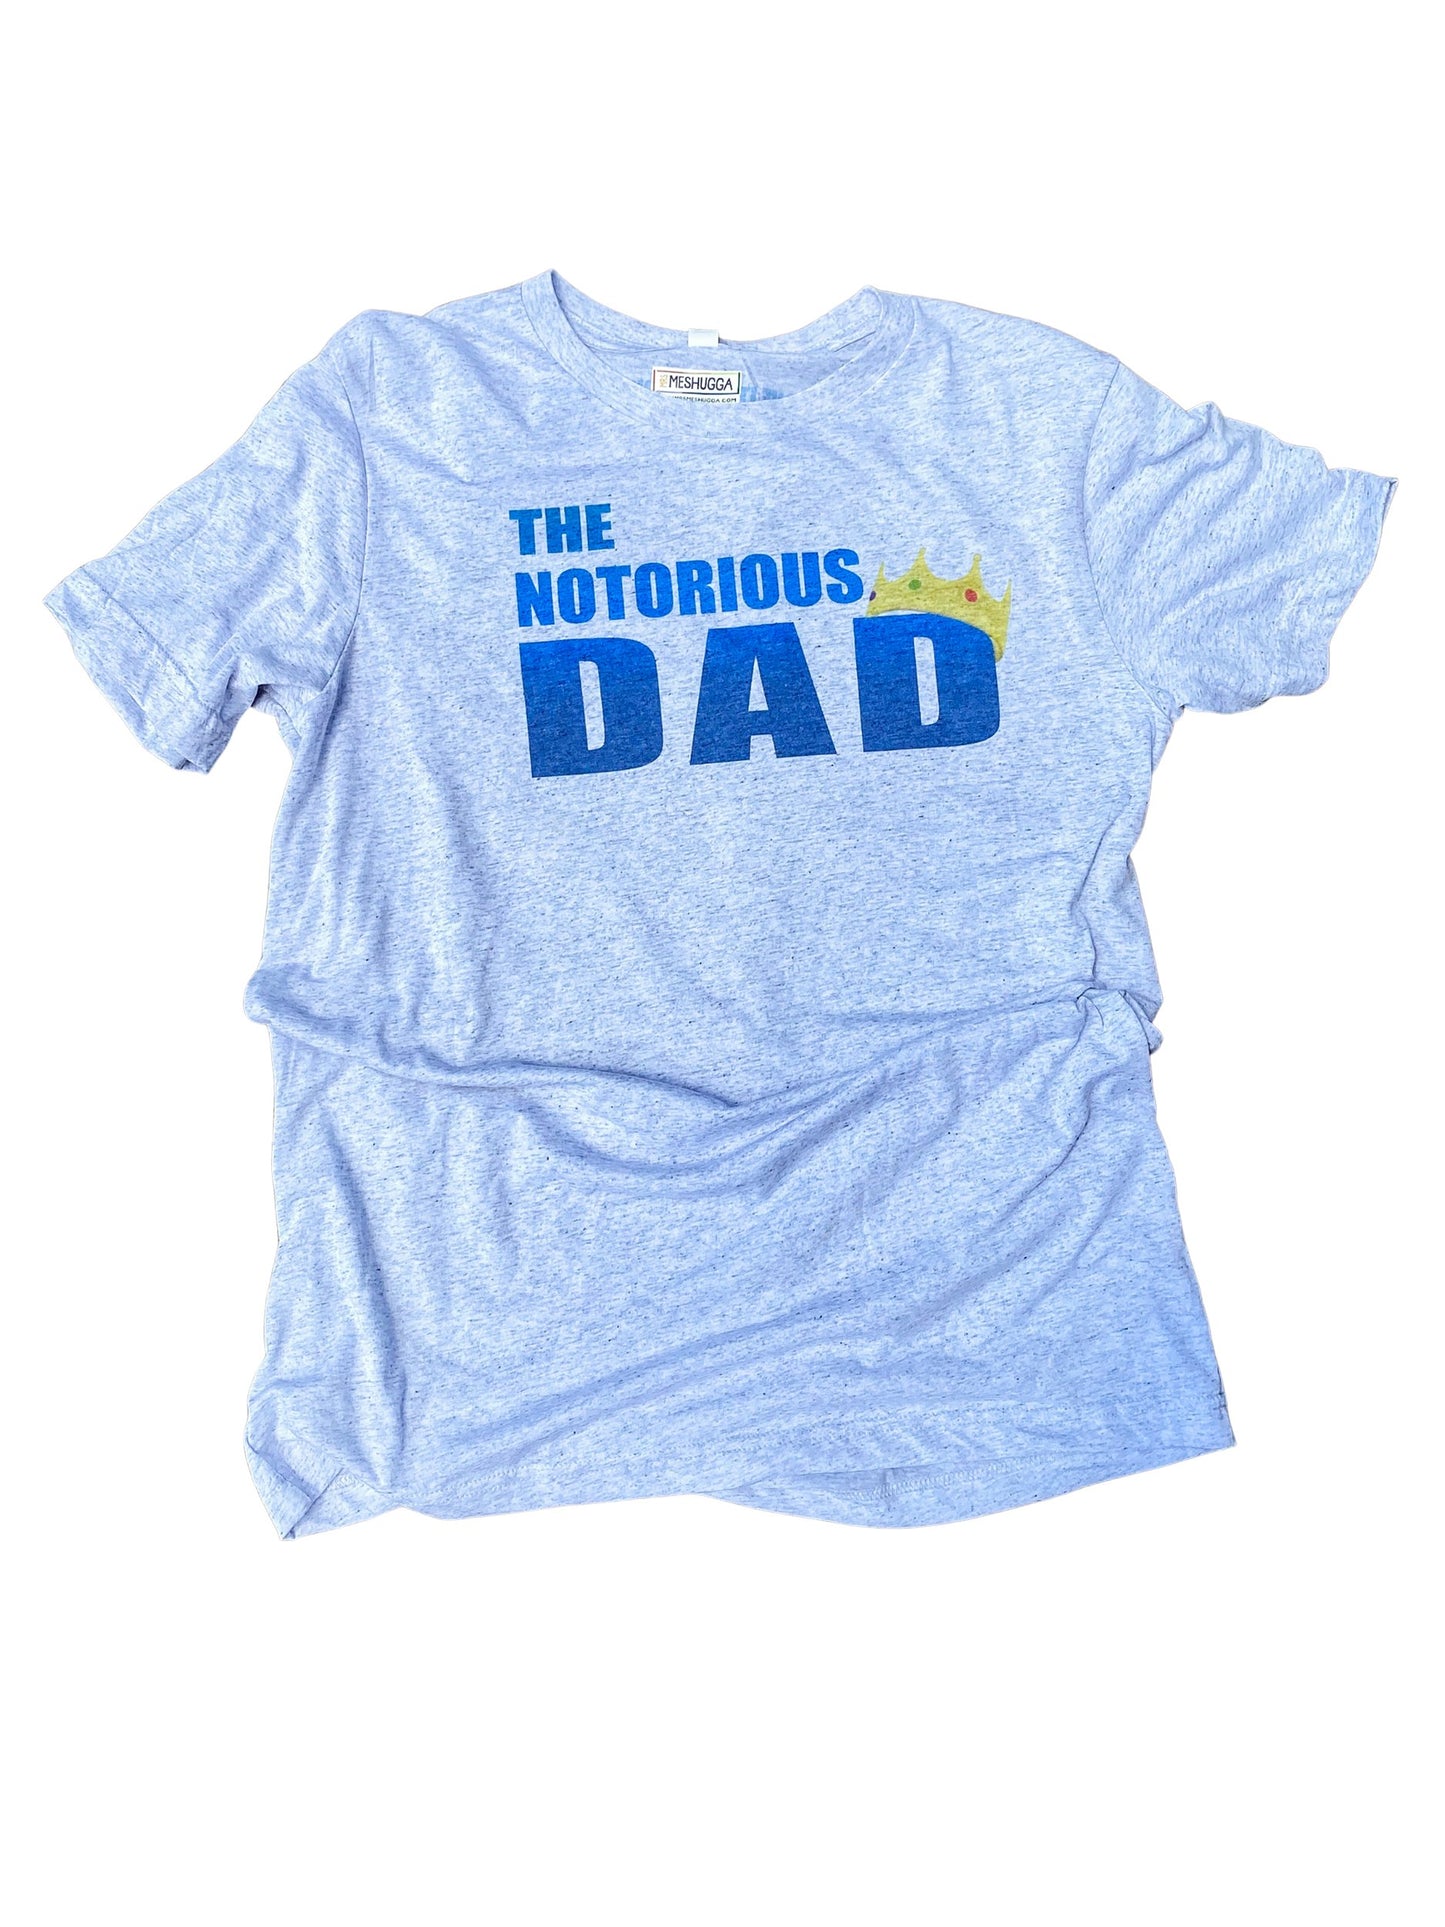 Notorious DAD T-shirt